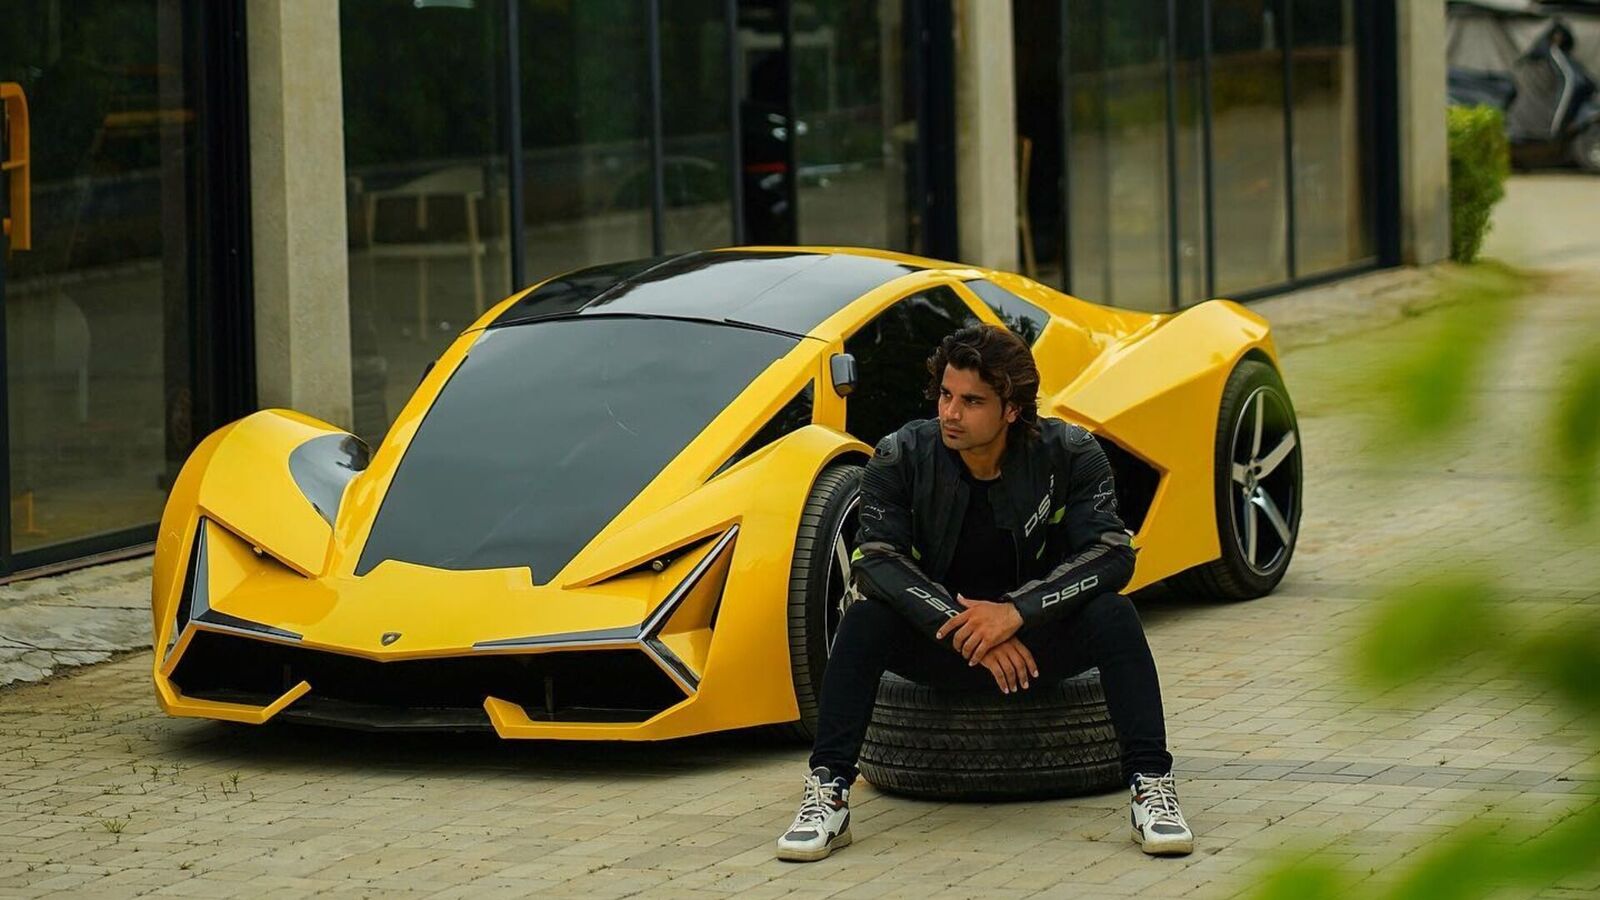 Made in Gujarat! YouTuber modifies Honda Civic into Lamborghini for ₹12.5 lakh